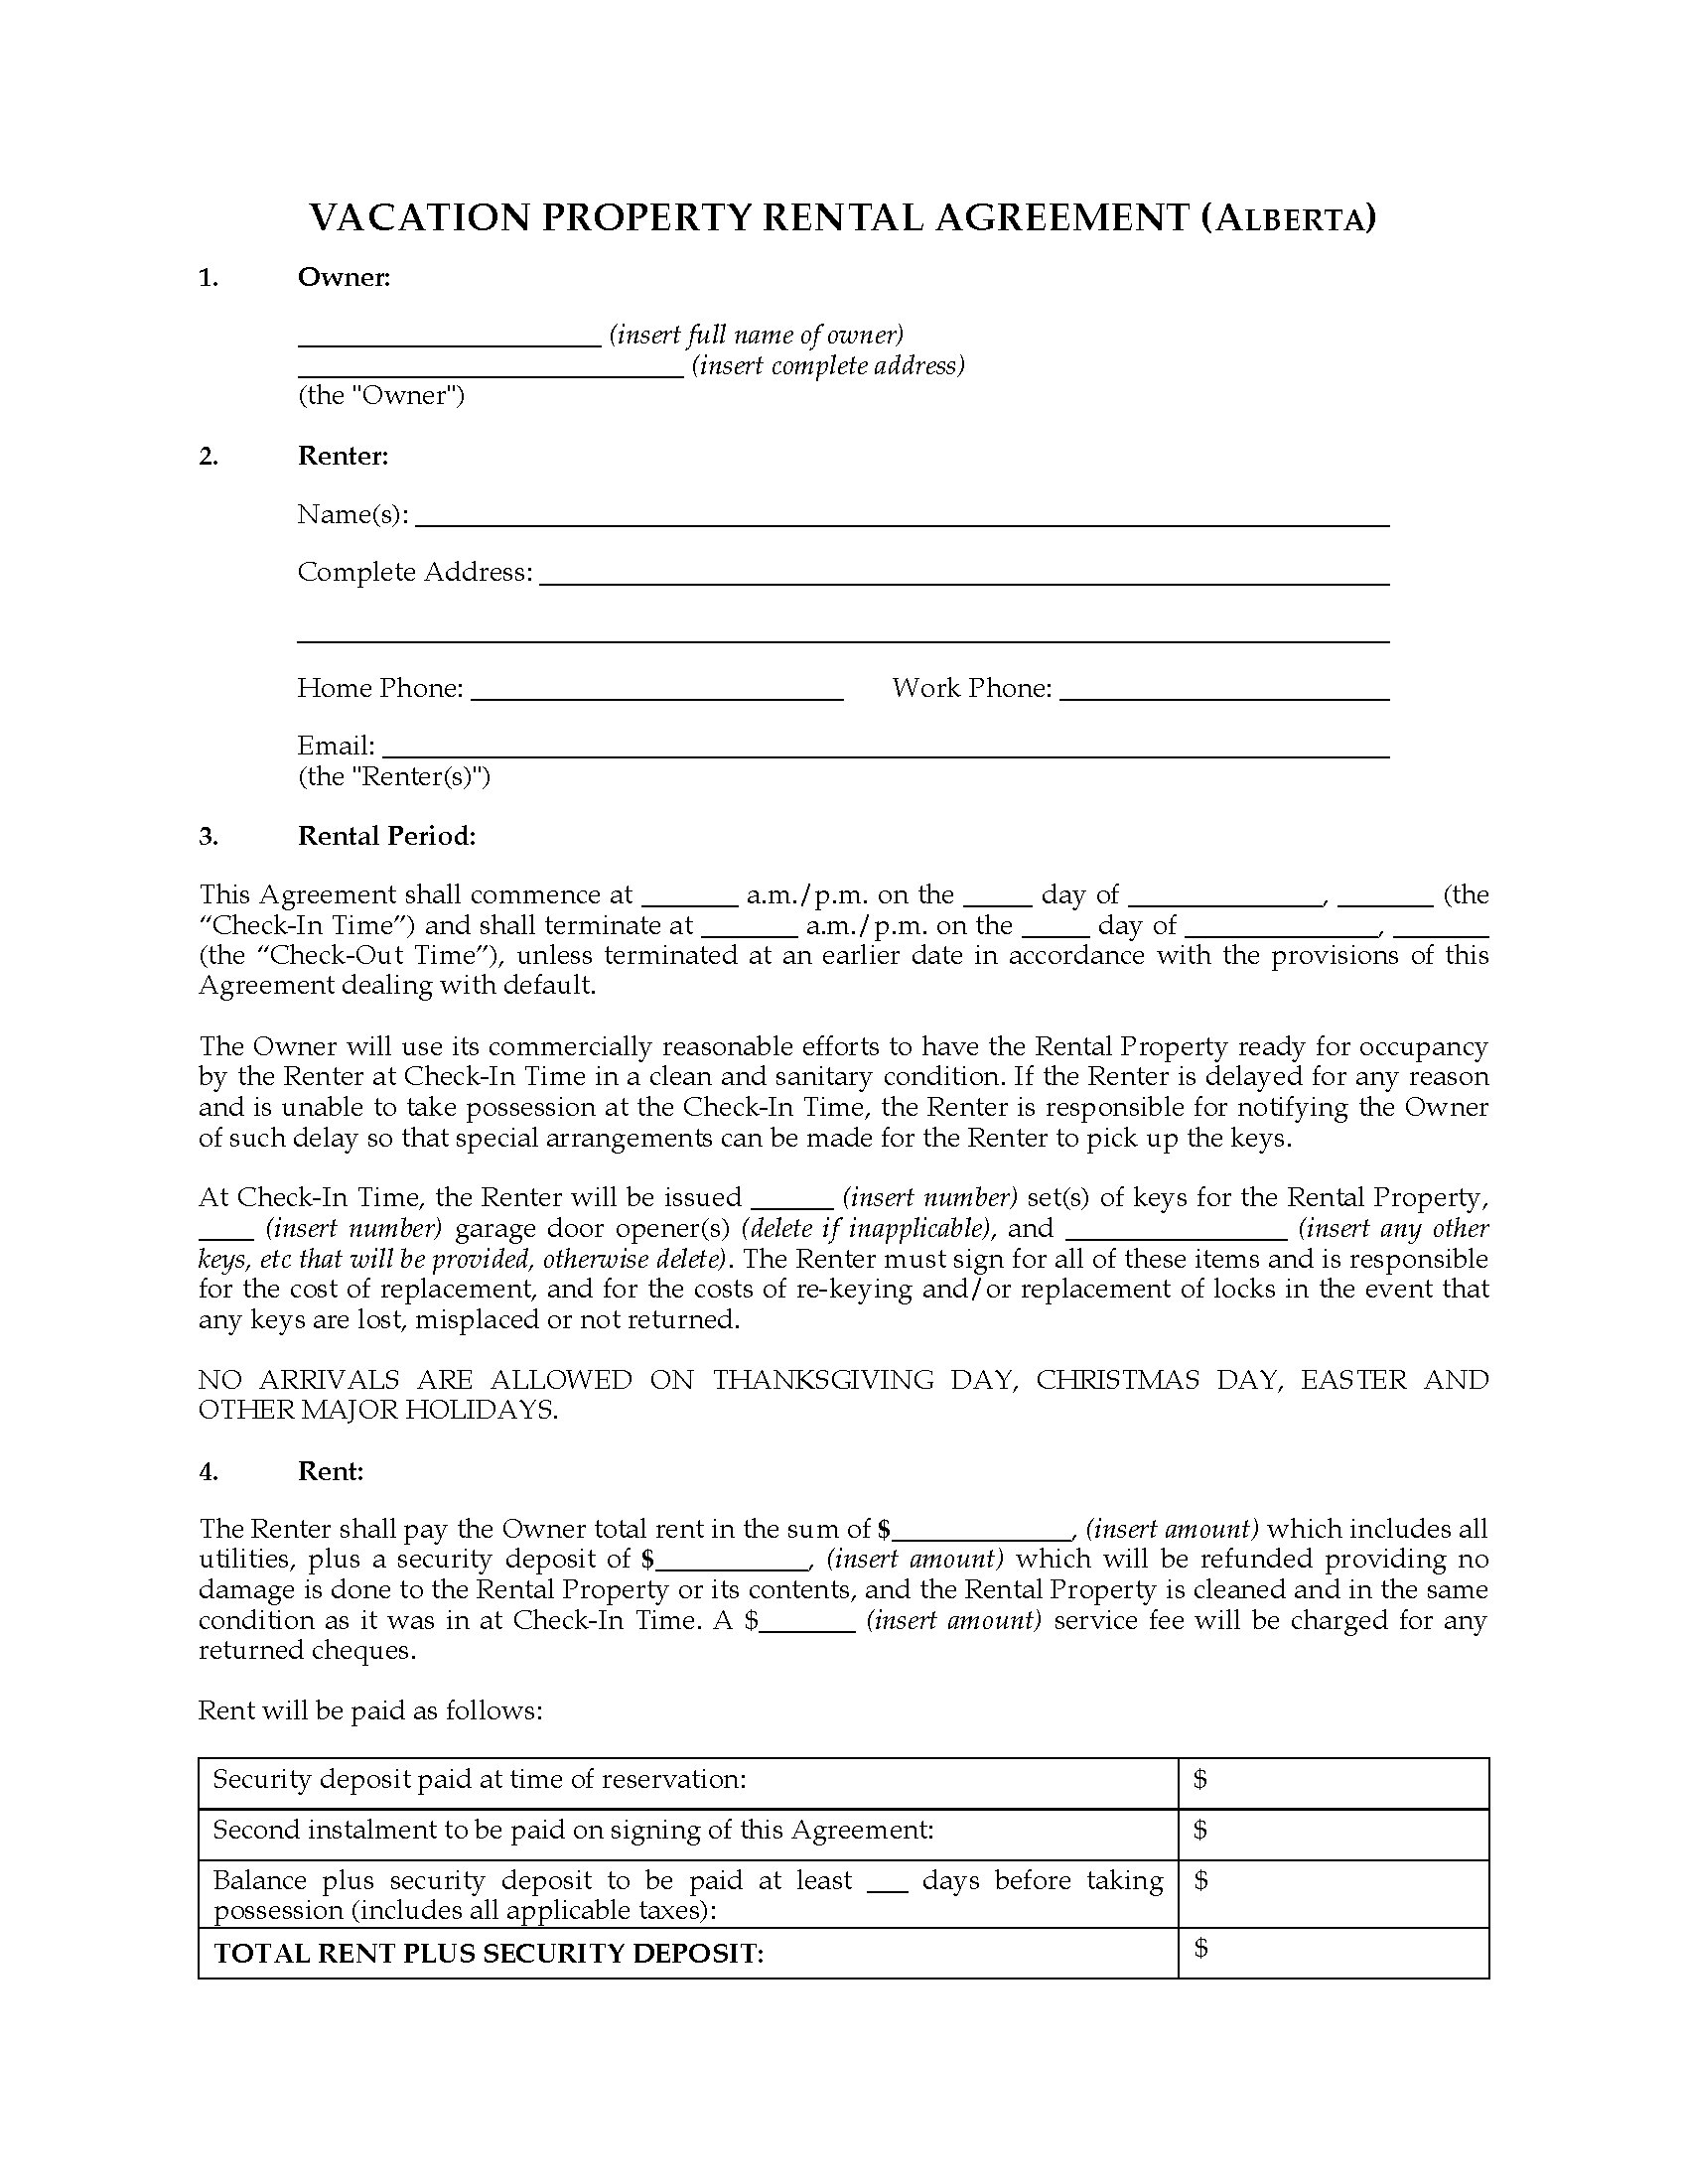 Timeshare Rental Agreement Alberta Vacation Property Rental Agreement